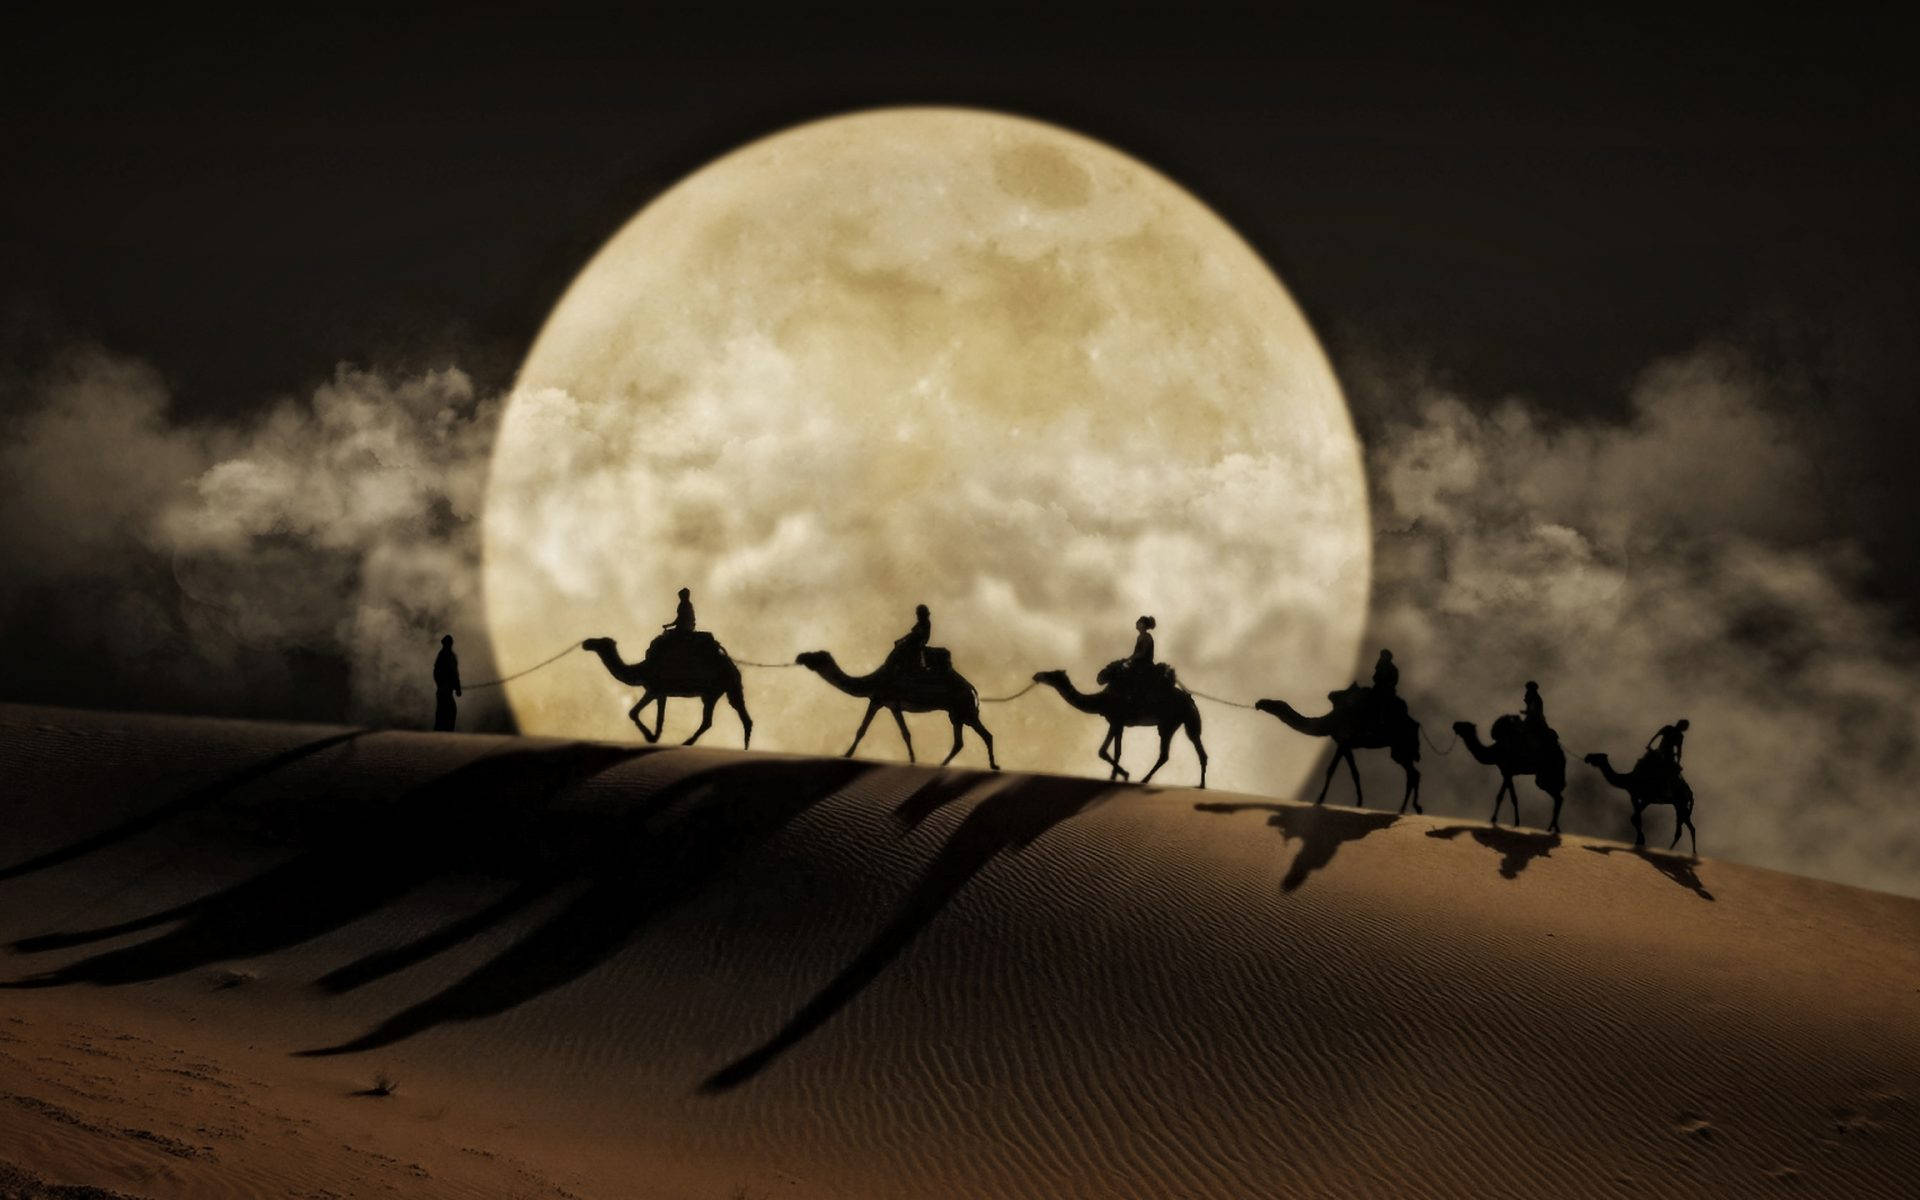 Fondosde Pantalla Hd: Luna Detrás De Jinetes En El Desierto. Fondo de pantalla